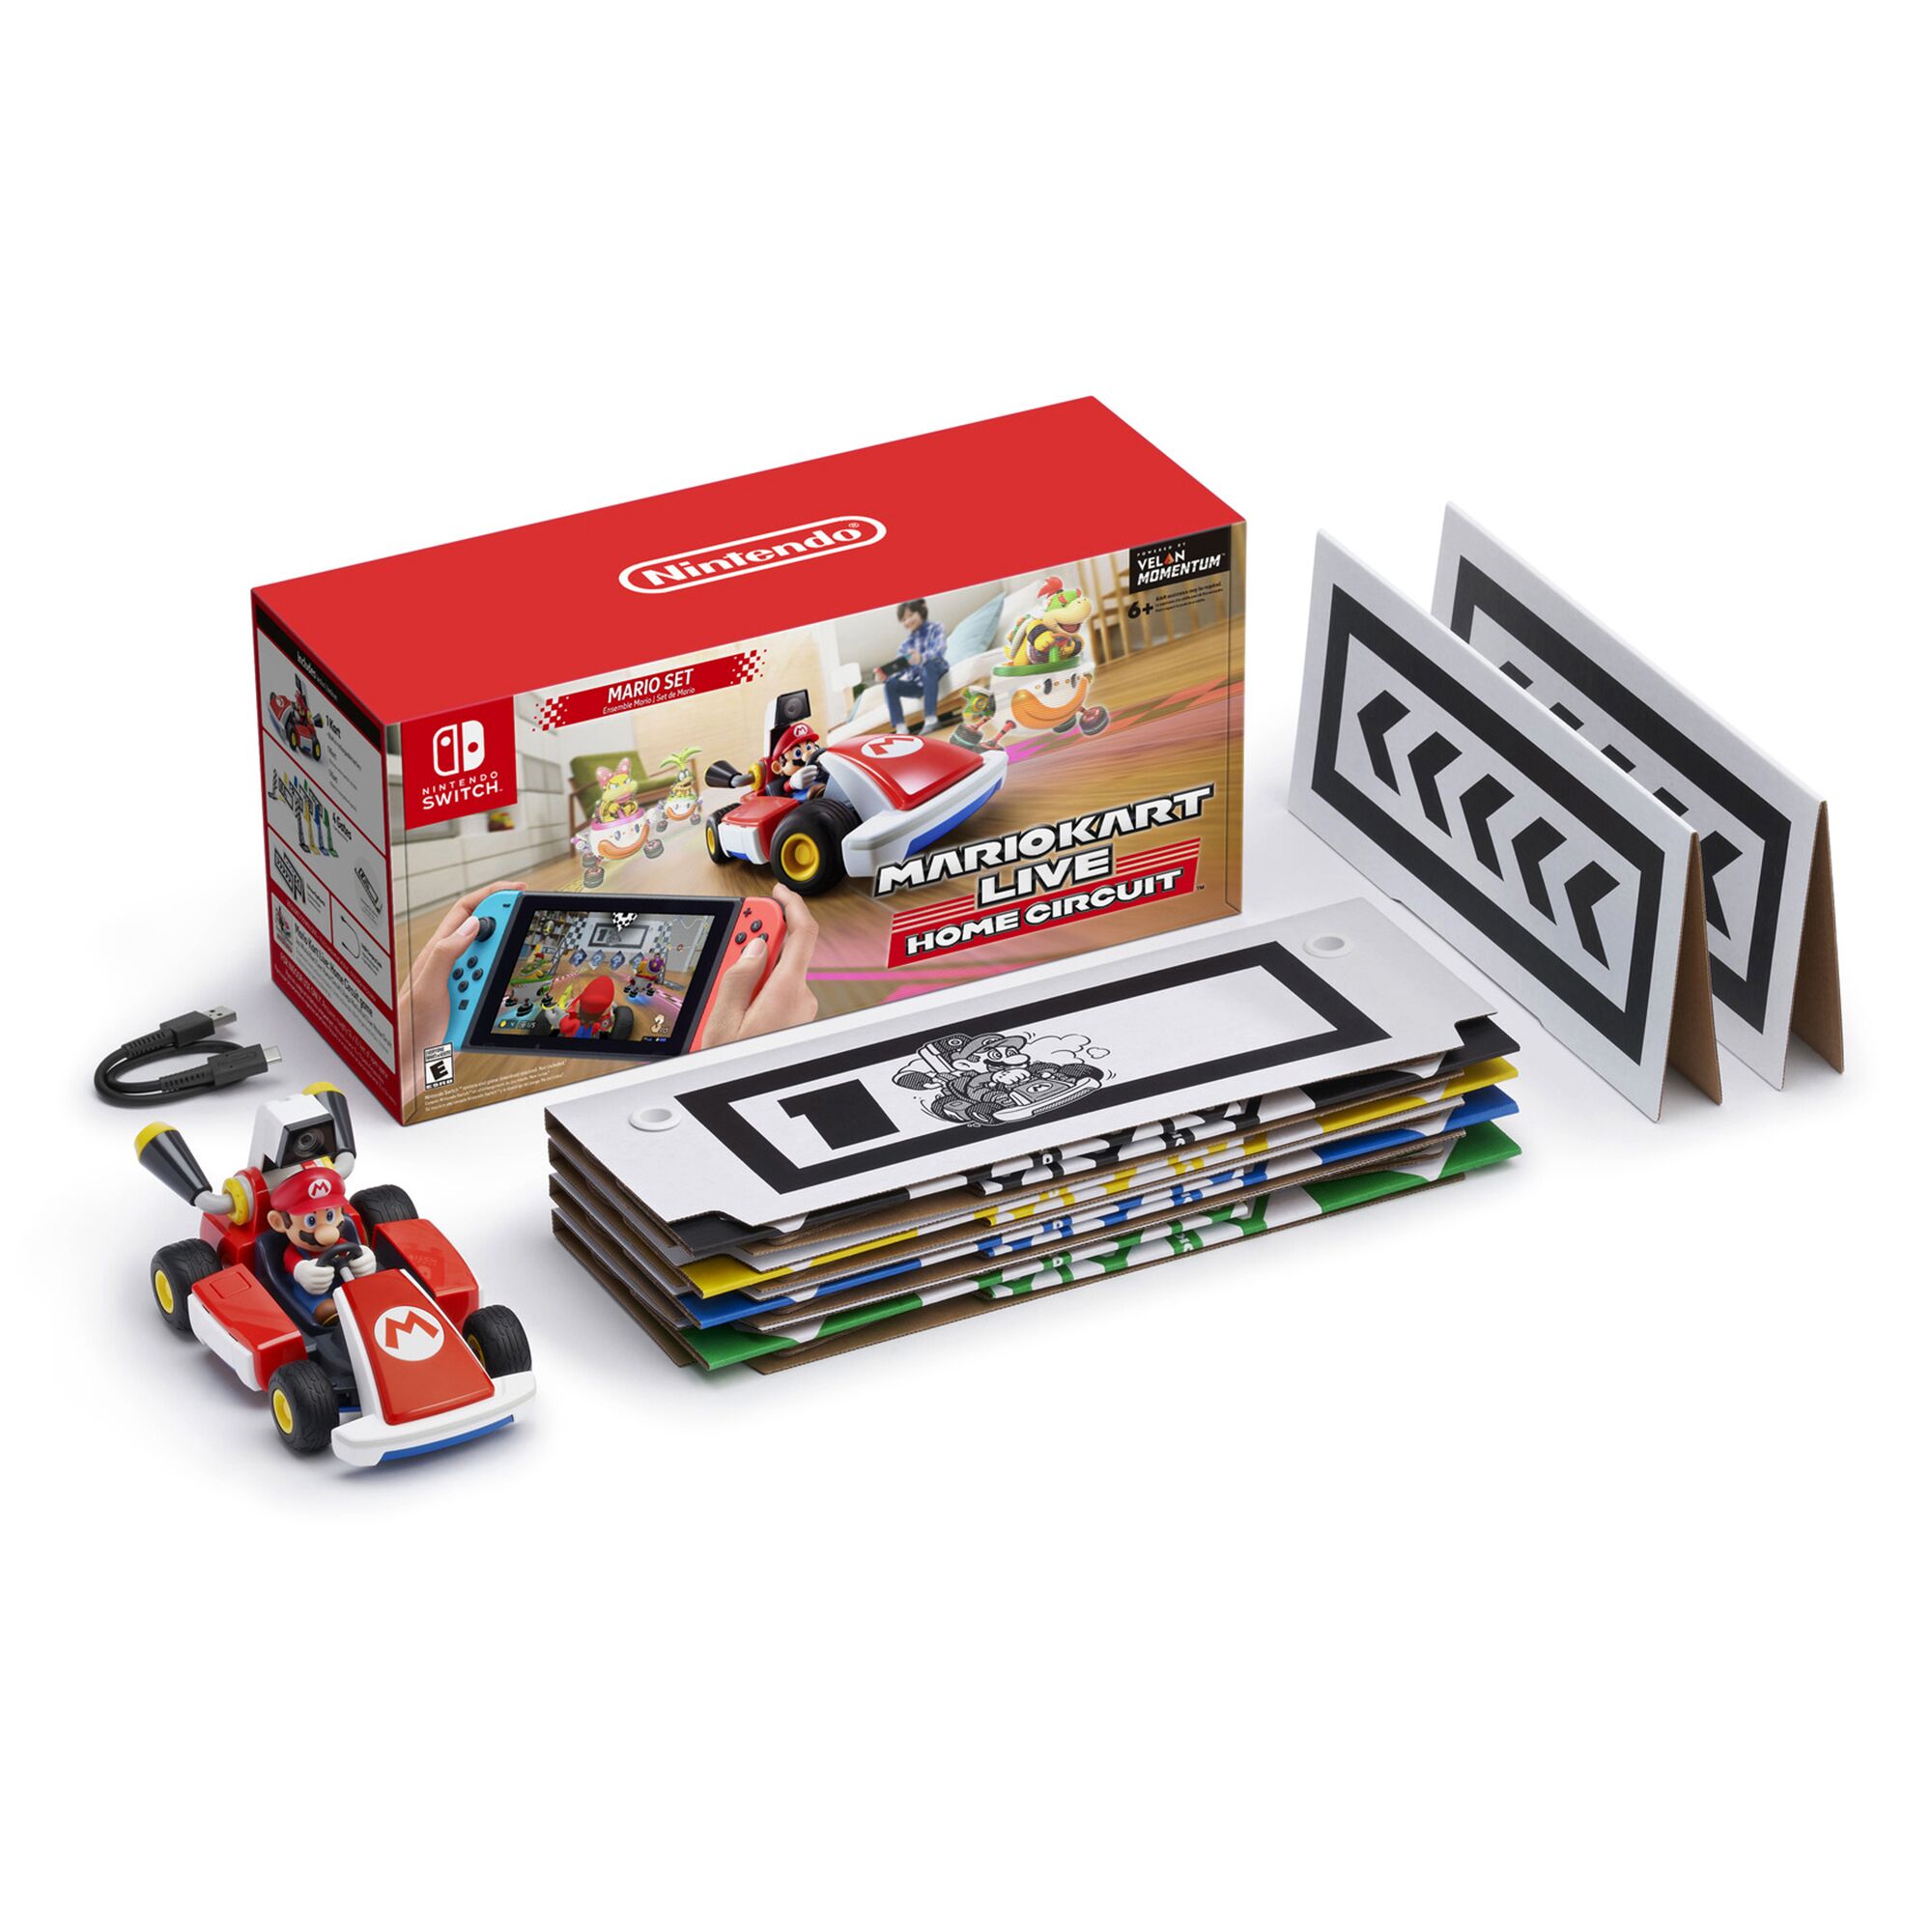 Mario Kart Live: Home Circuit. Credit: Nintendo of America